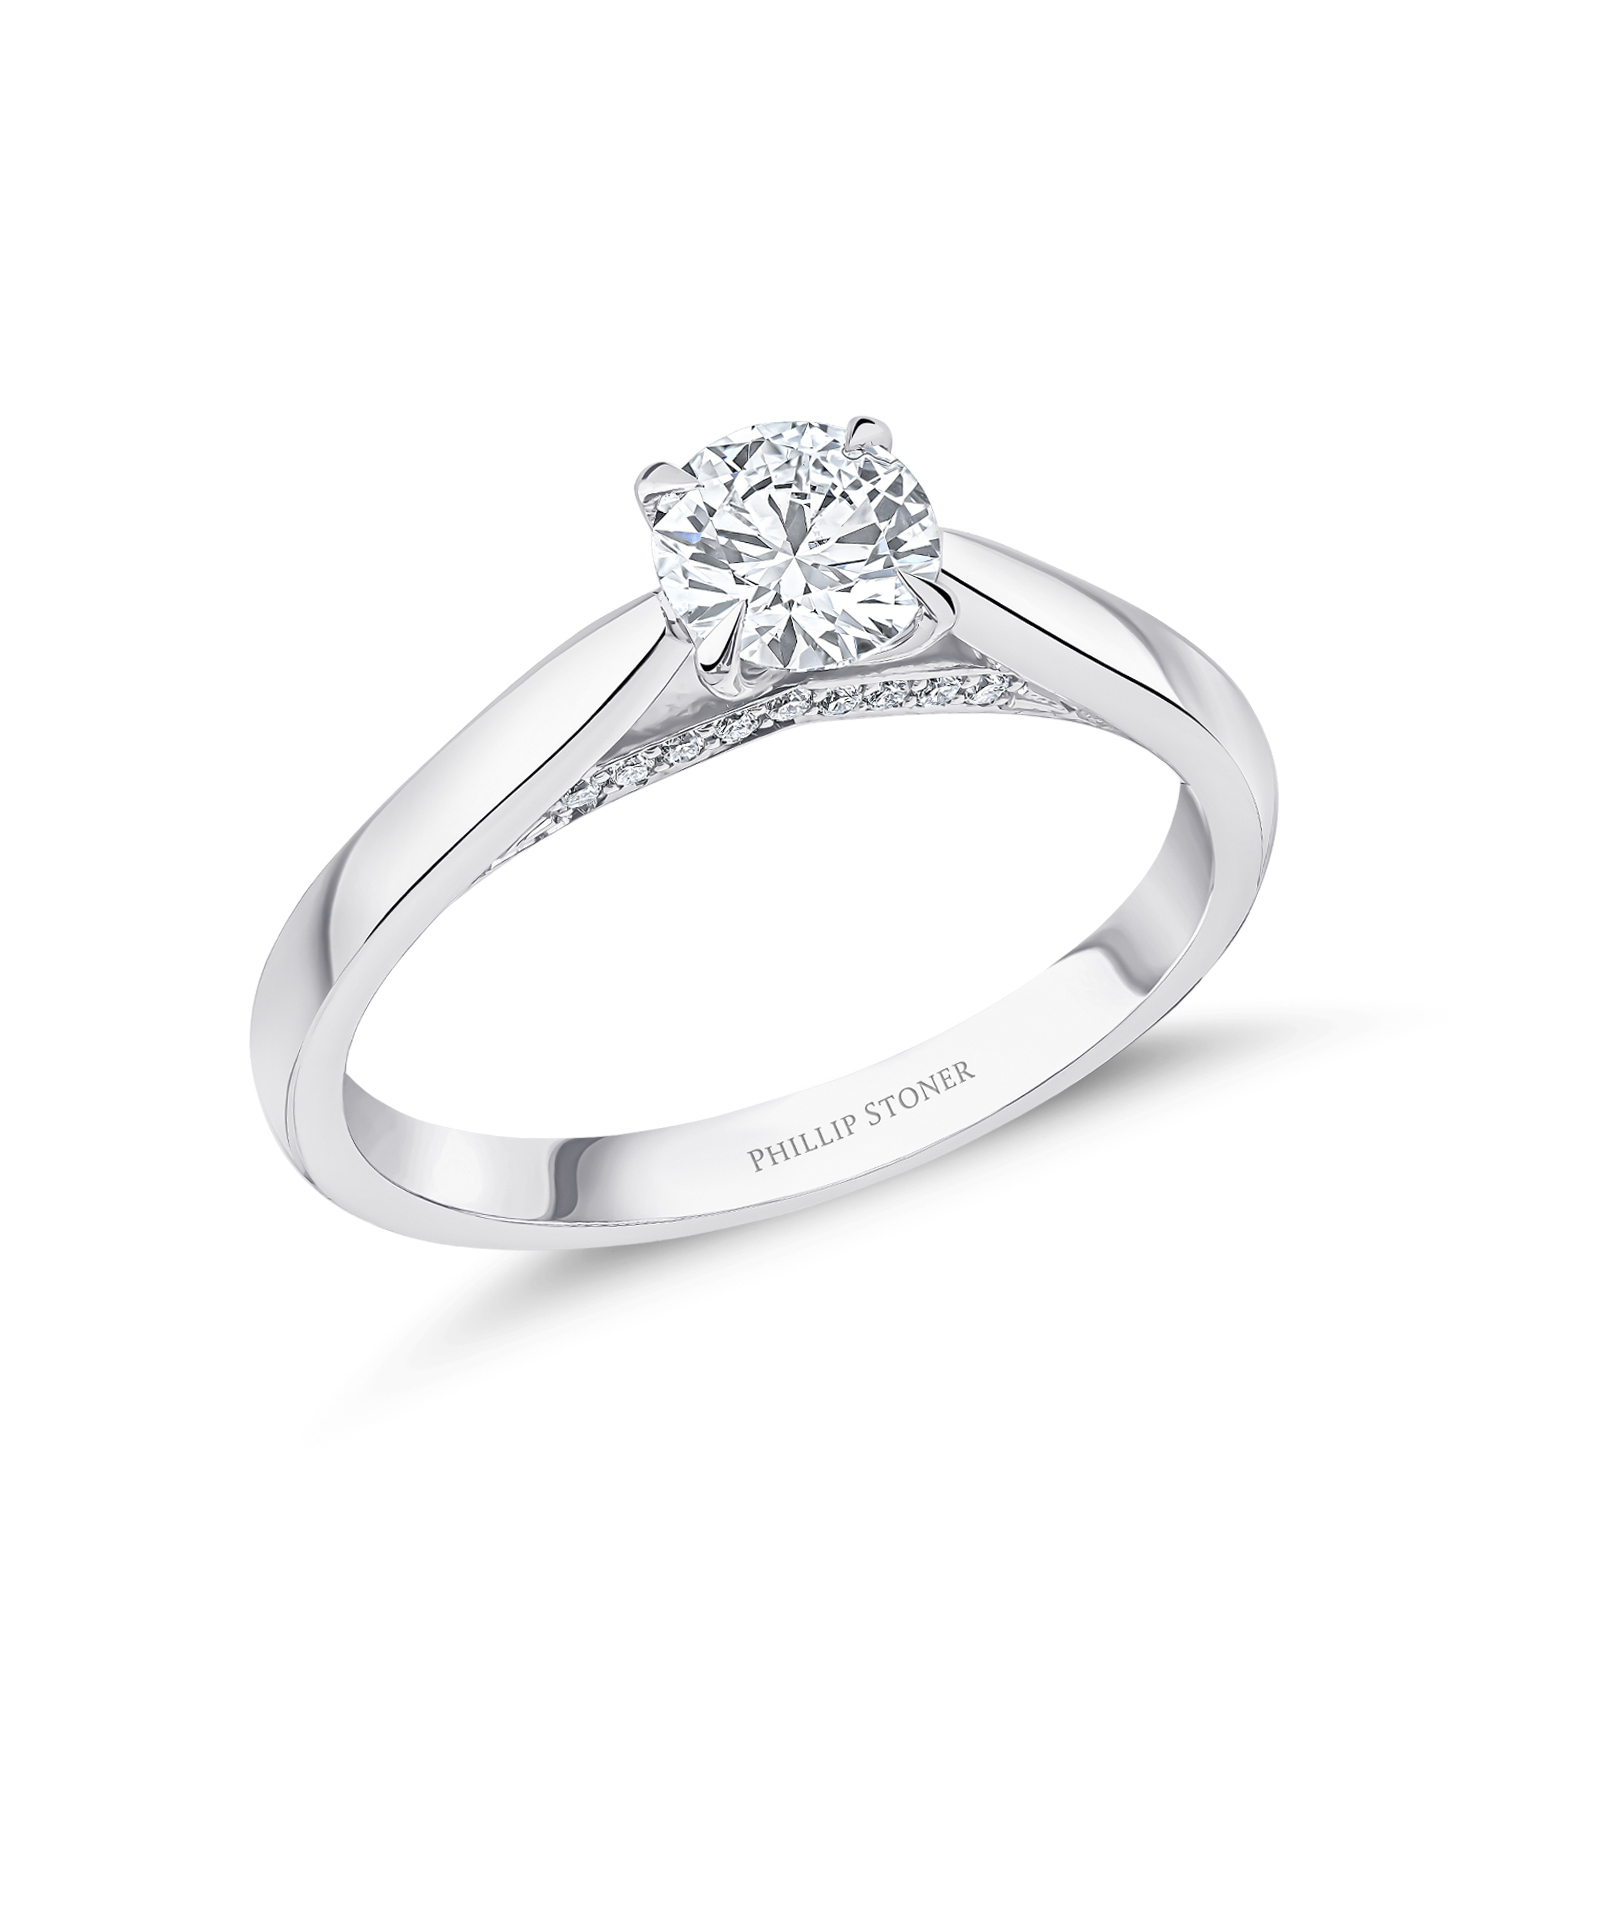 0.50ct Round Brilliant Cut Diamond Solitaire Ring with Diamond Bridge - Phillip Stoner The Jeweller